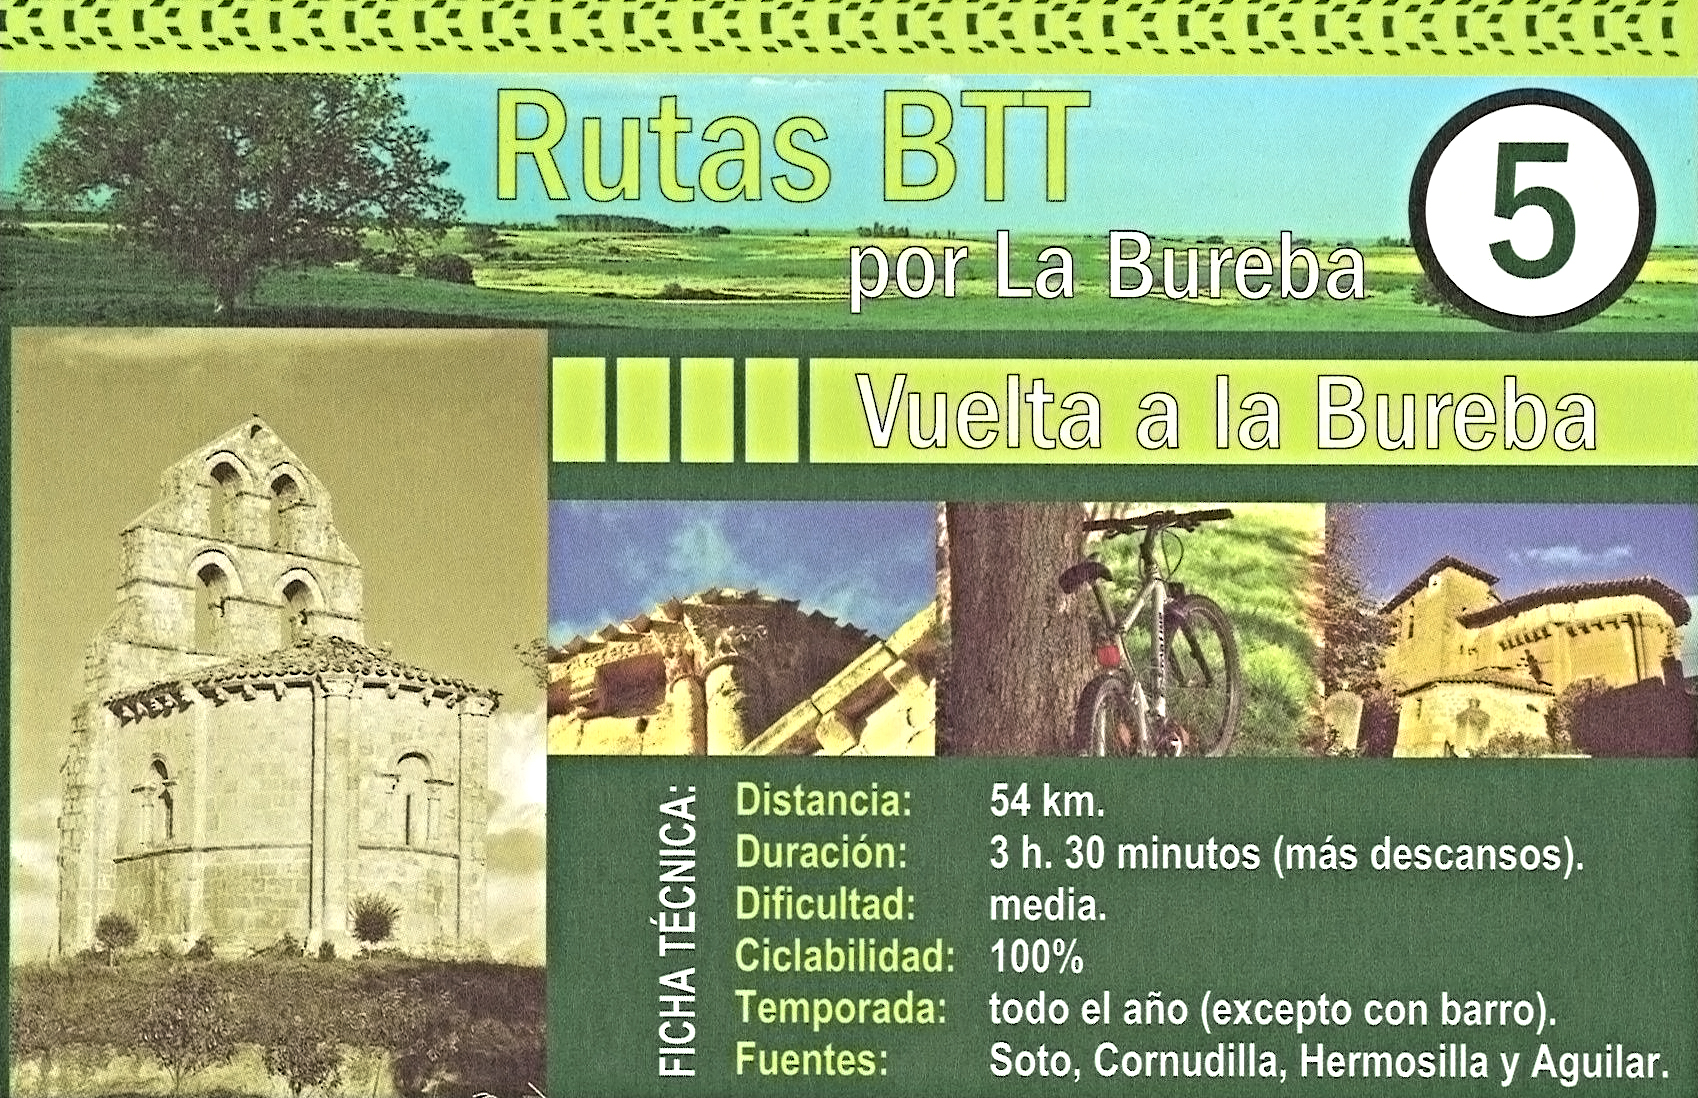 Rutas BTT, Comarca de La Bureba - Burgos - Ruta por el Románico de La Bureba - Burgos ✈️ Forum Castilla and Leon